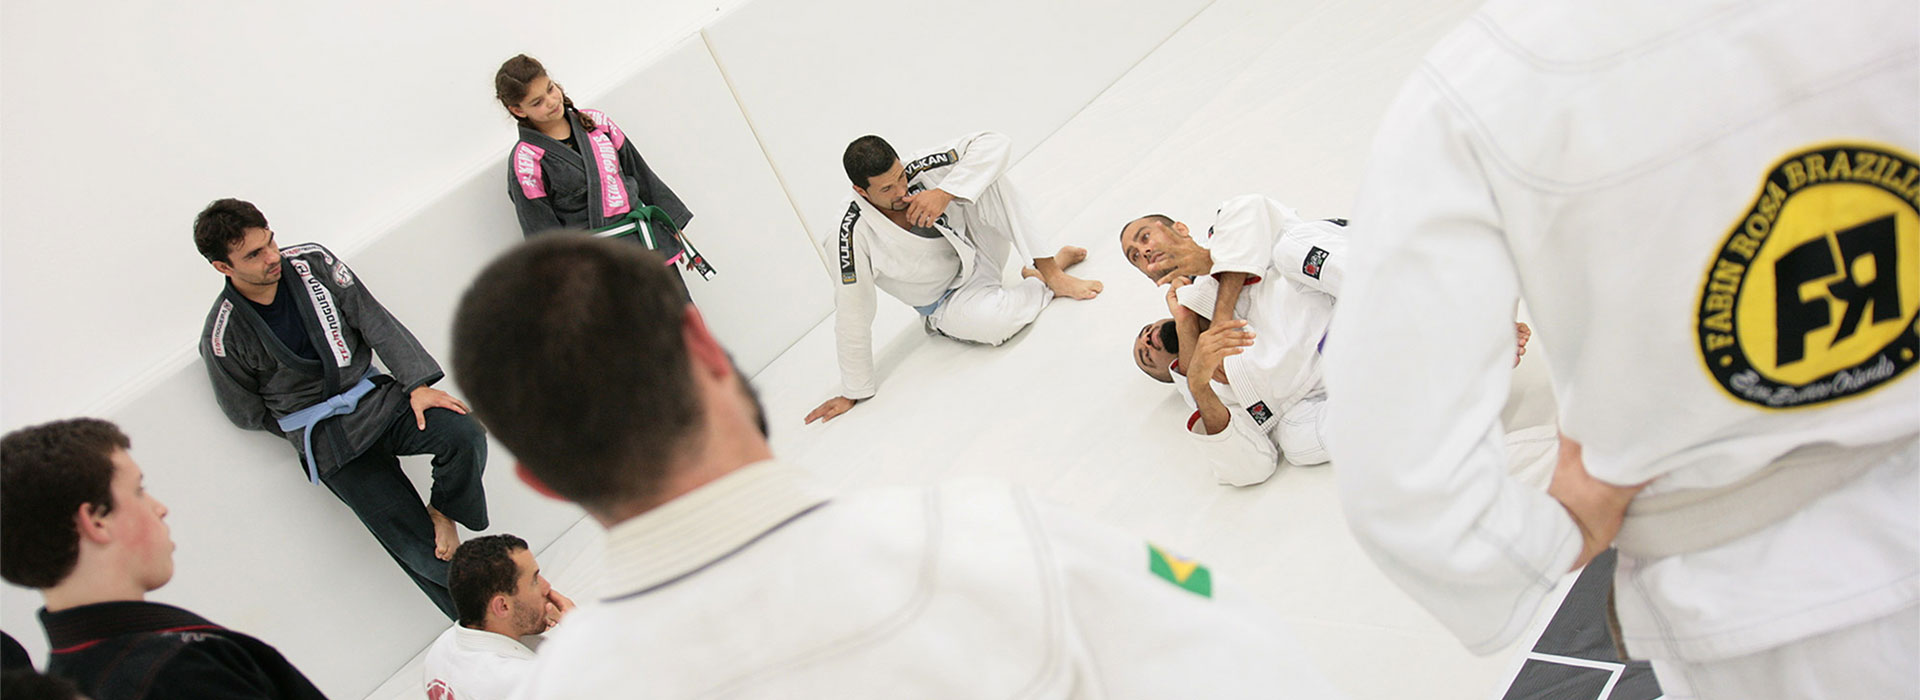 Learn Self-Defense At Fabin Rosa Brazilian Jiu Jitsu Belle Isle Near Taft-Vineland